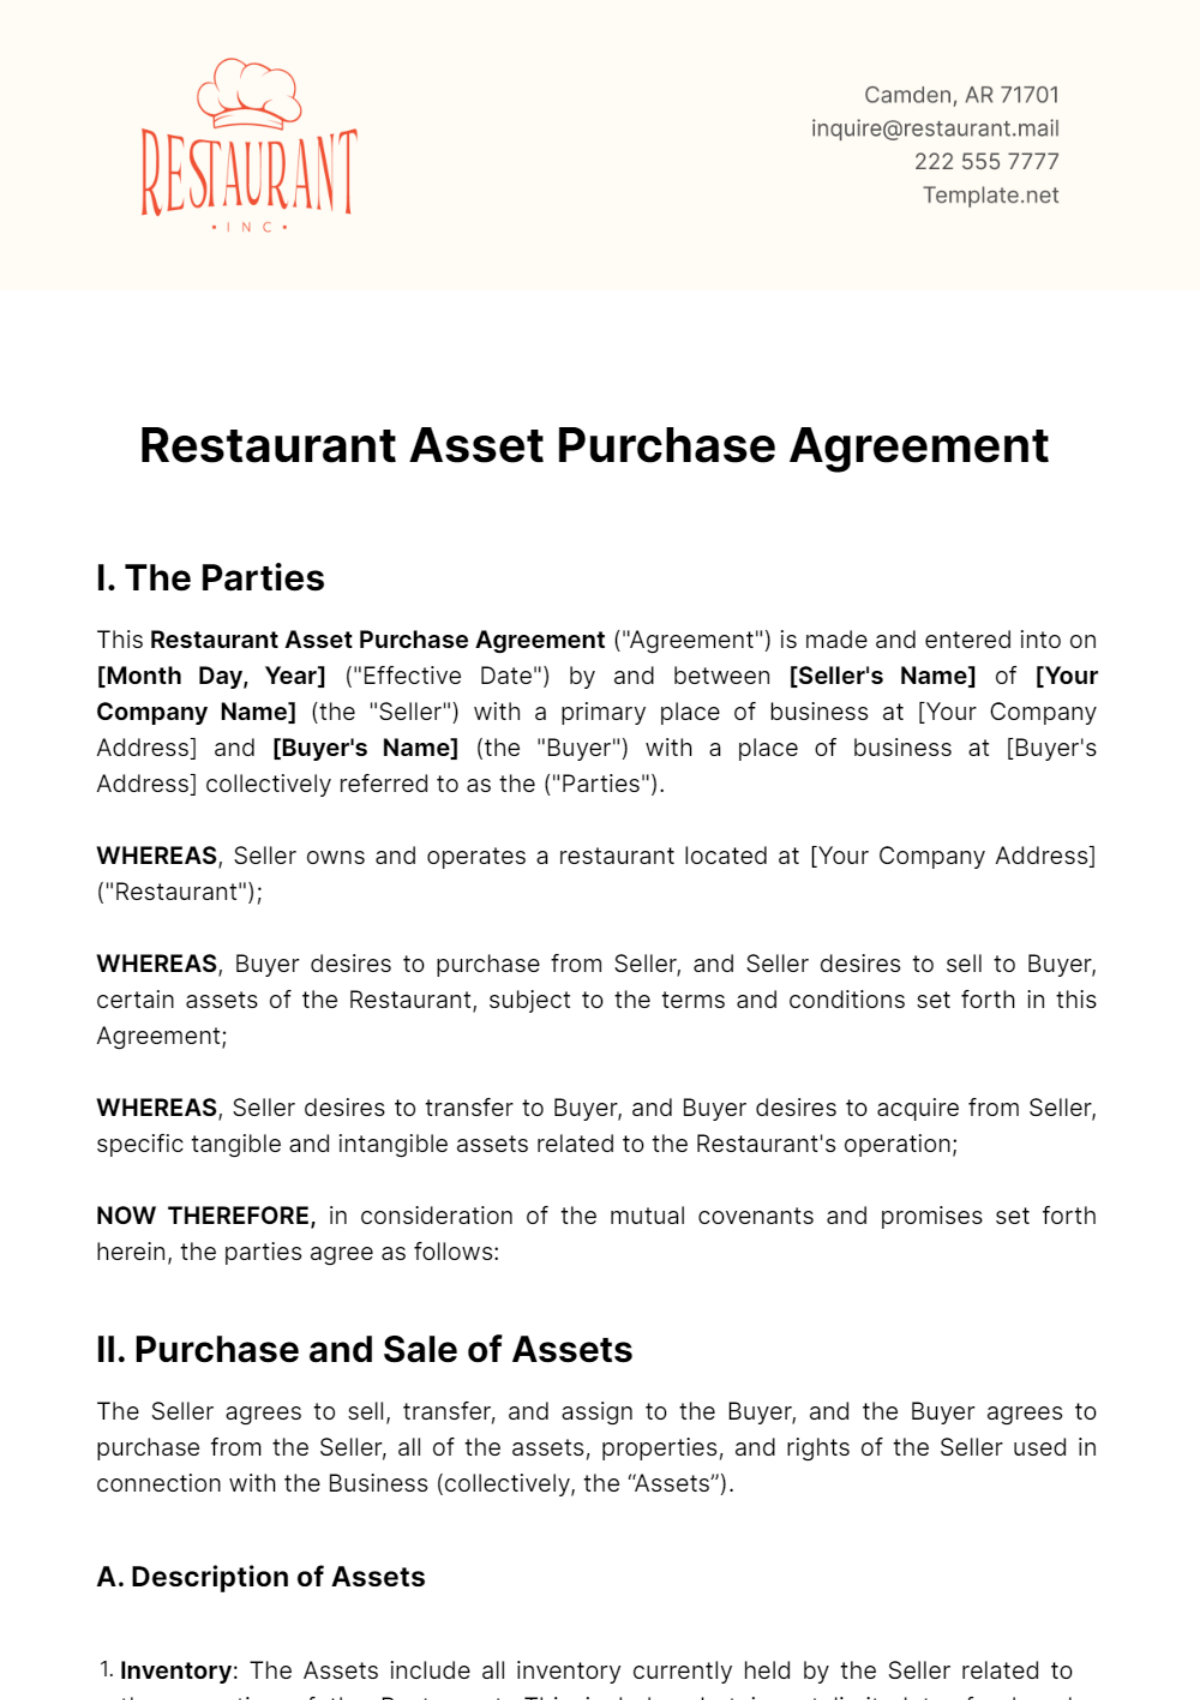 Restaurant Asset Purchase Agreement Template